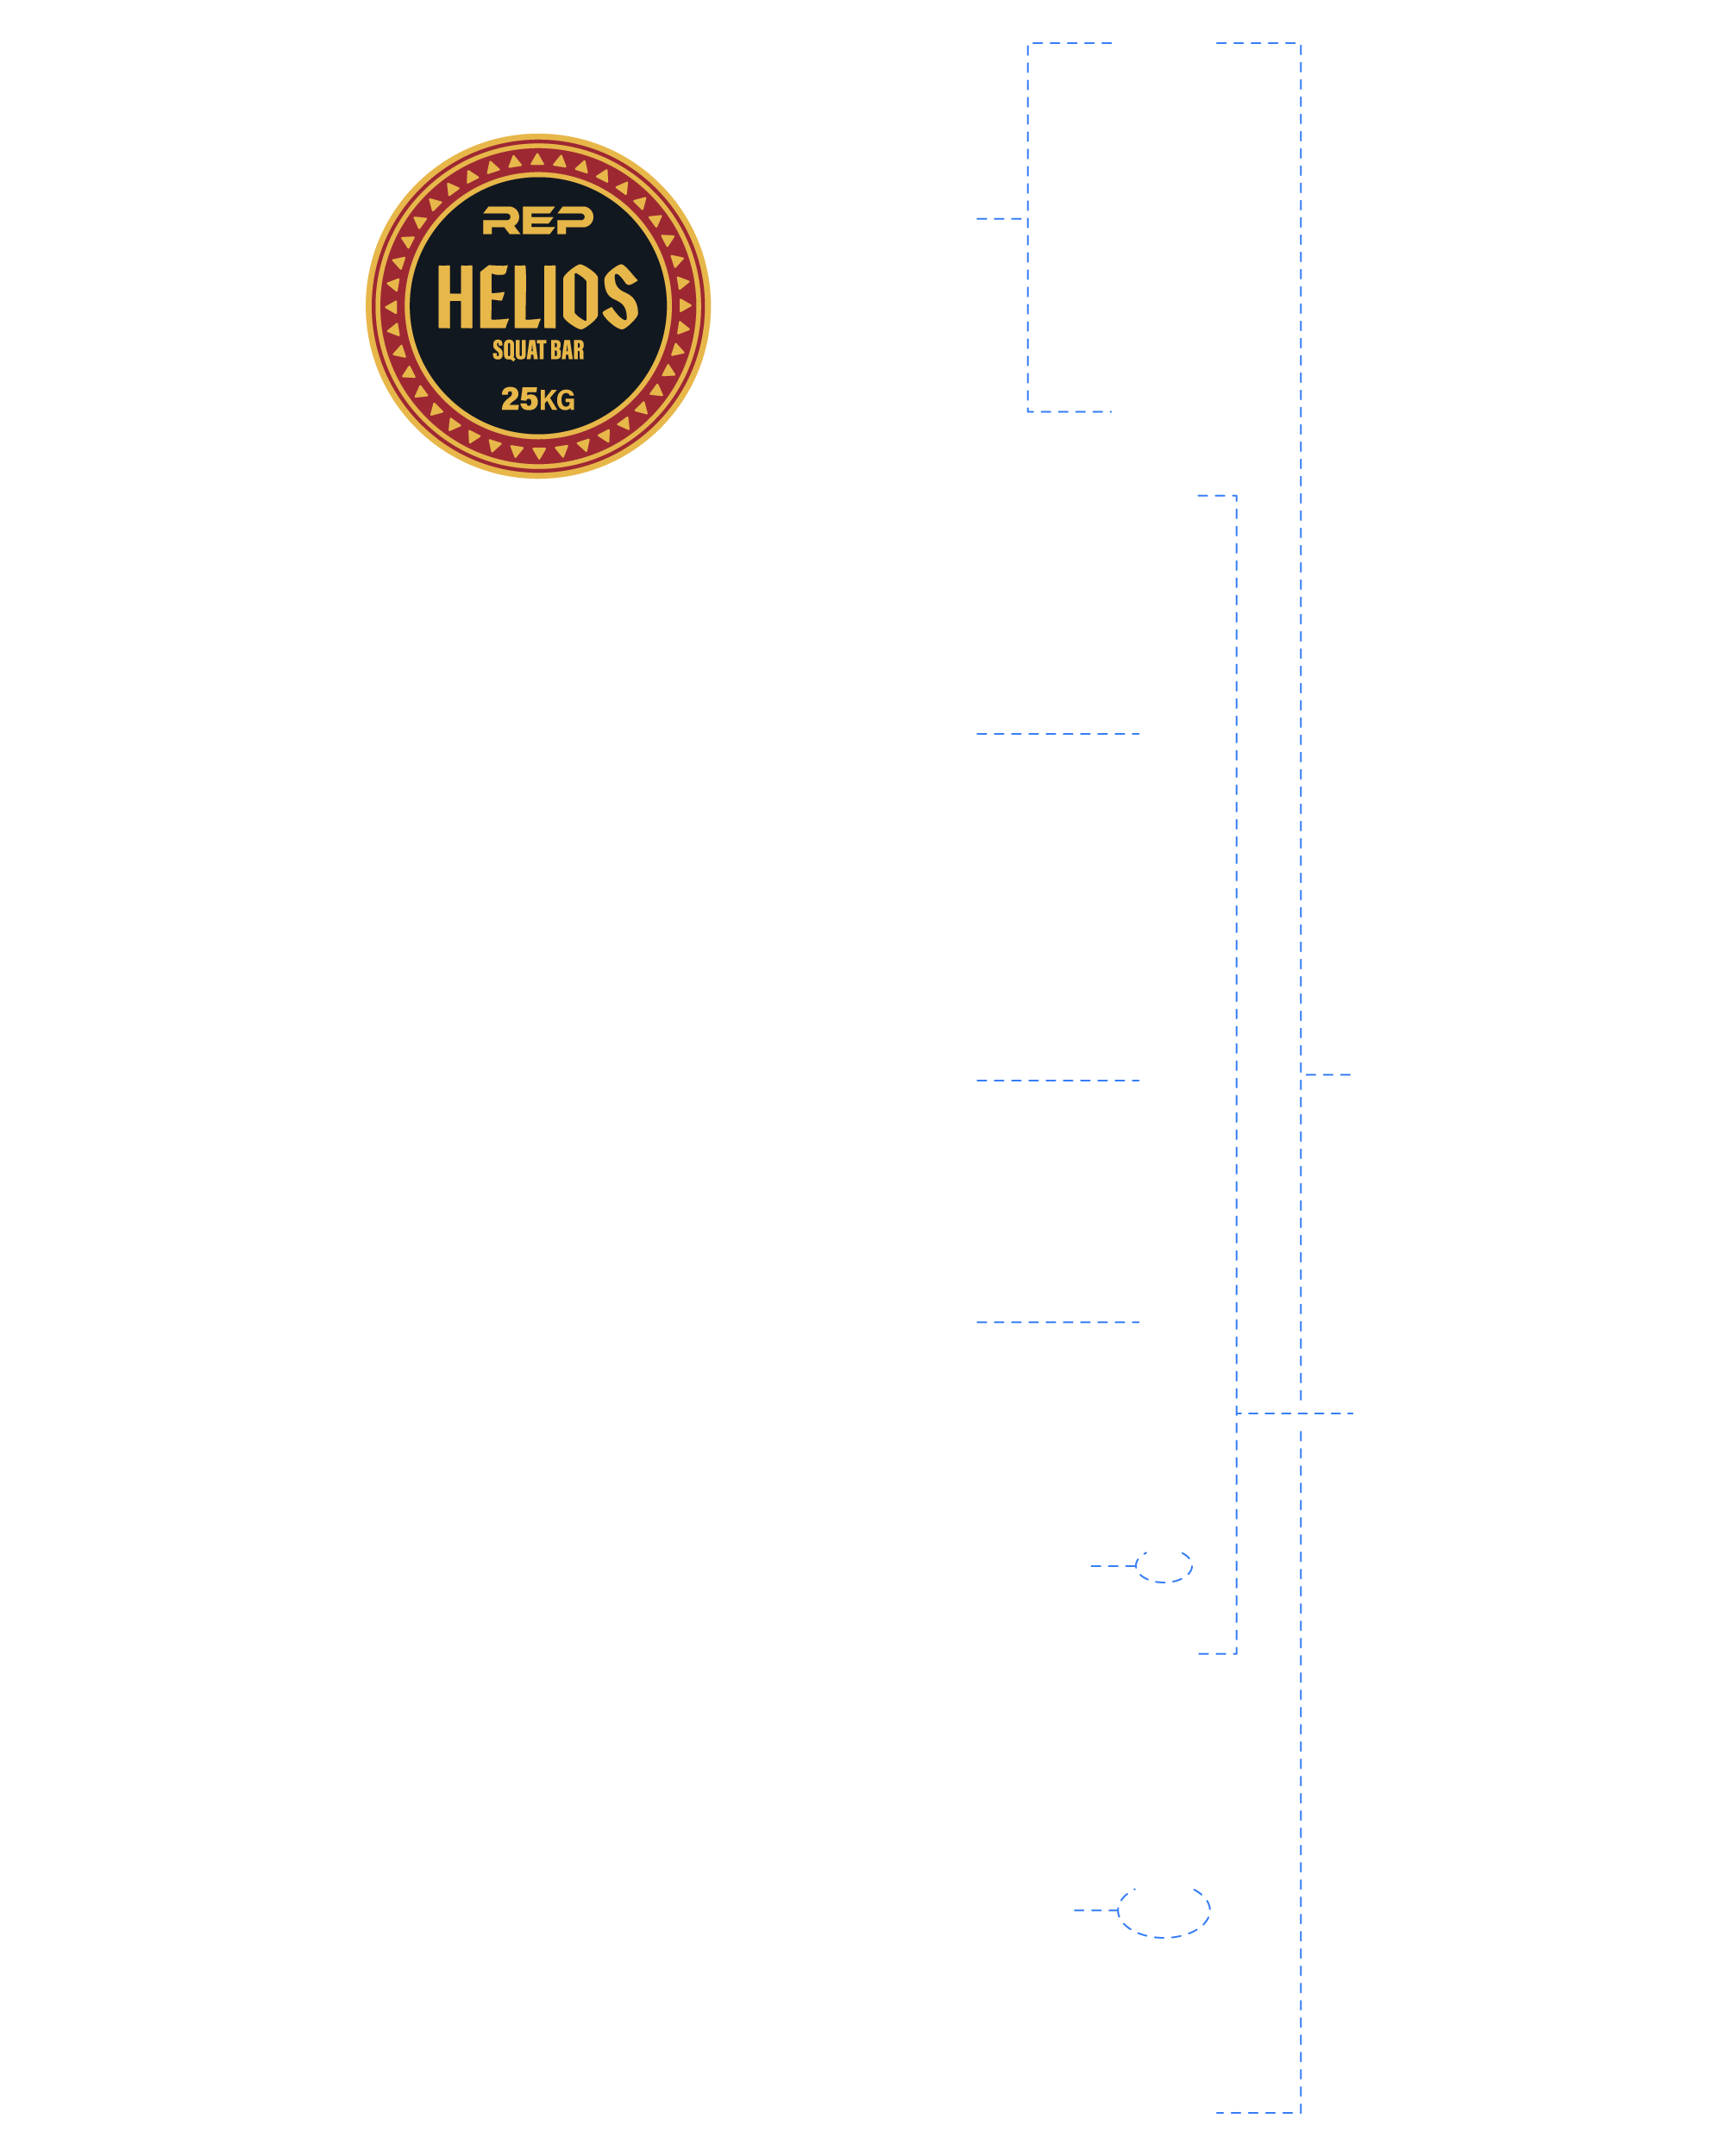 Helios Squat Bar Informational